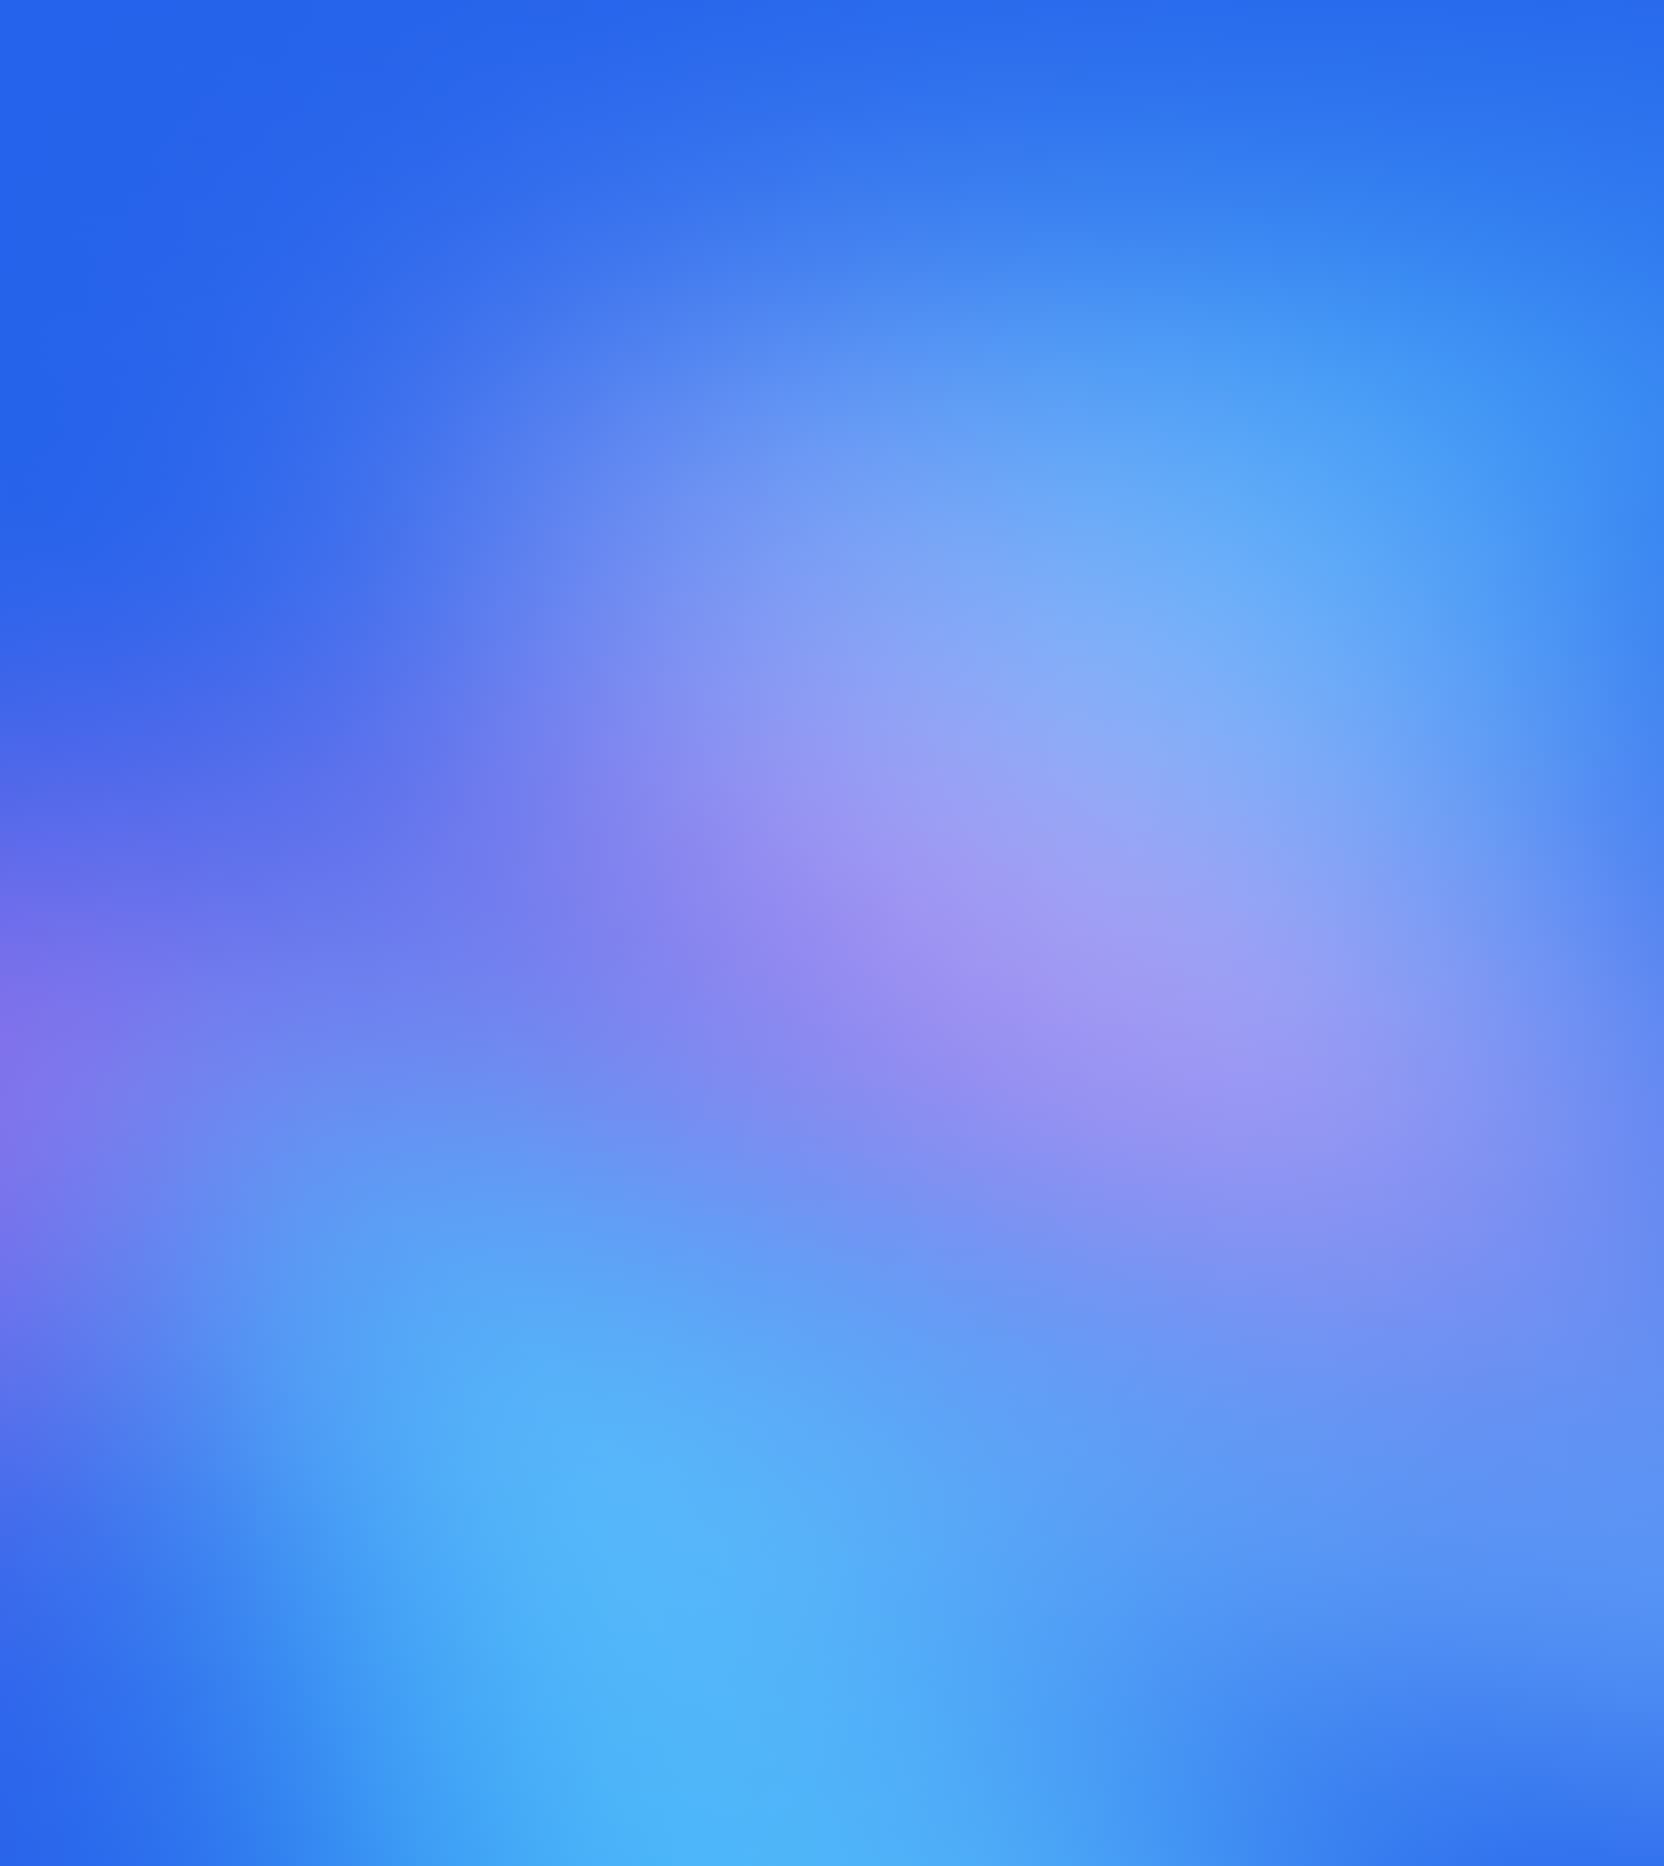 Blue gradient background image